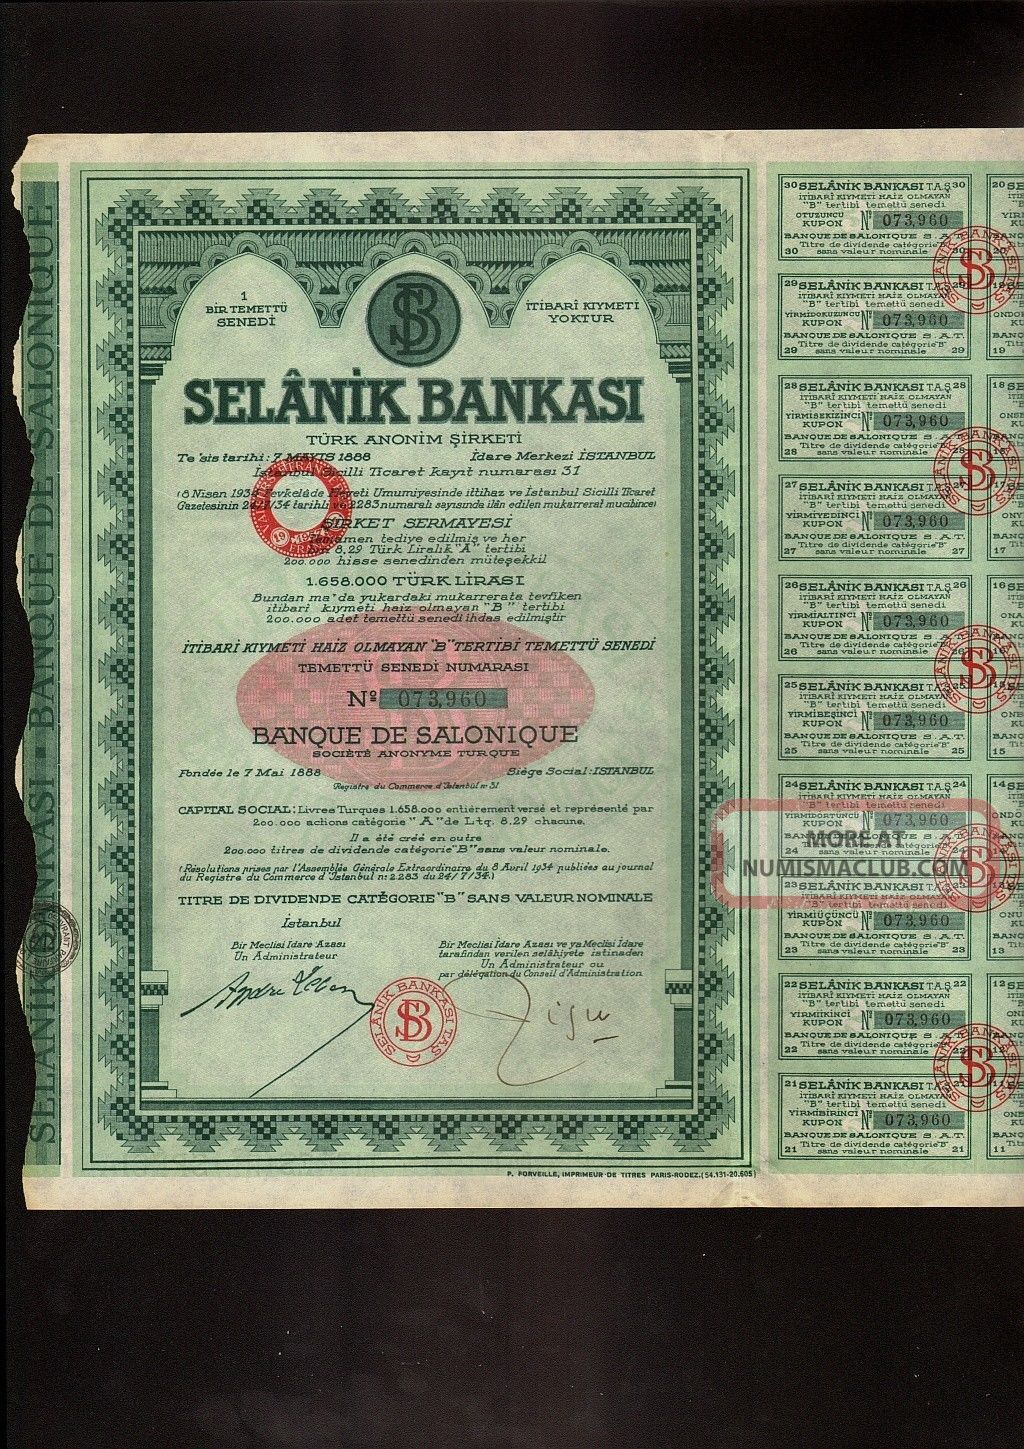 Greece Turkey Banque De Salonique Selanik Bankasi Salonica Istanbul Stocks & Bonds, Scripophily photo